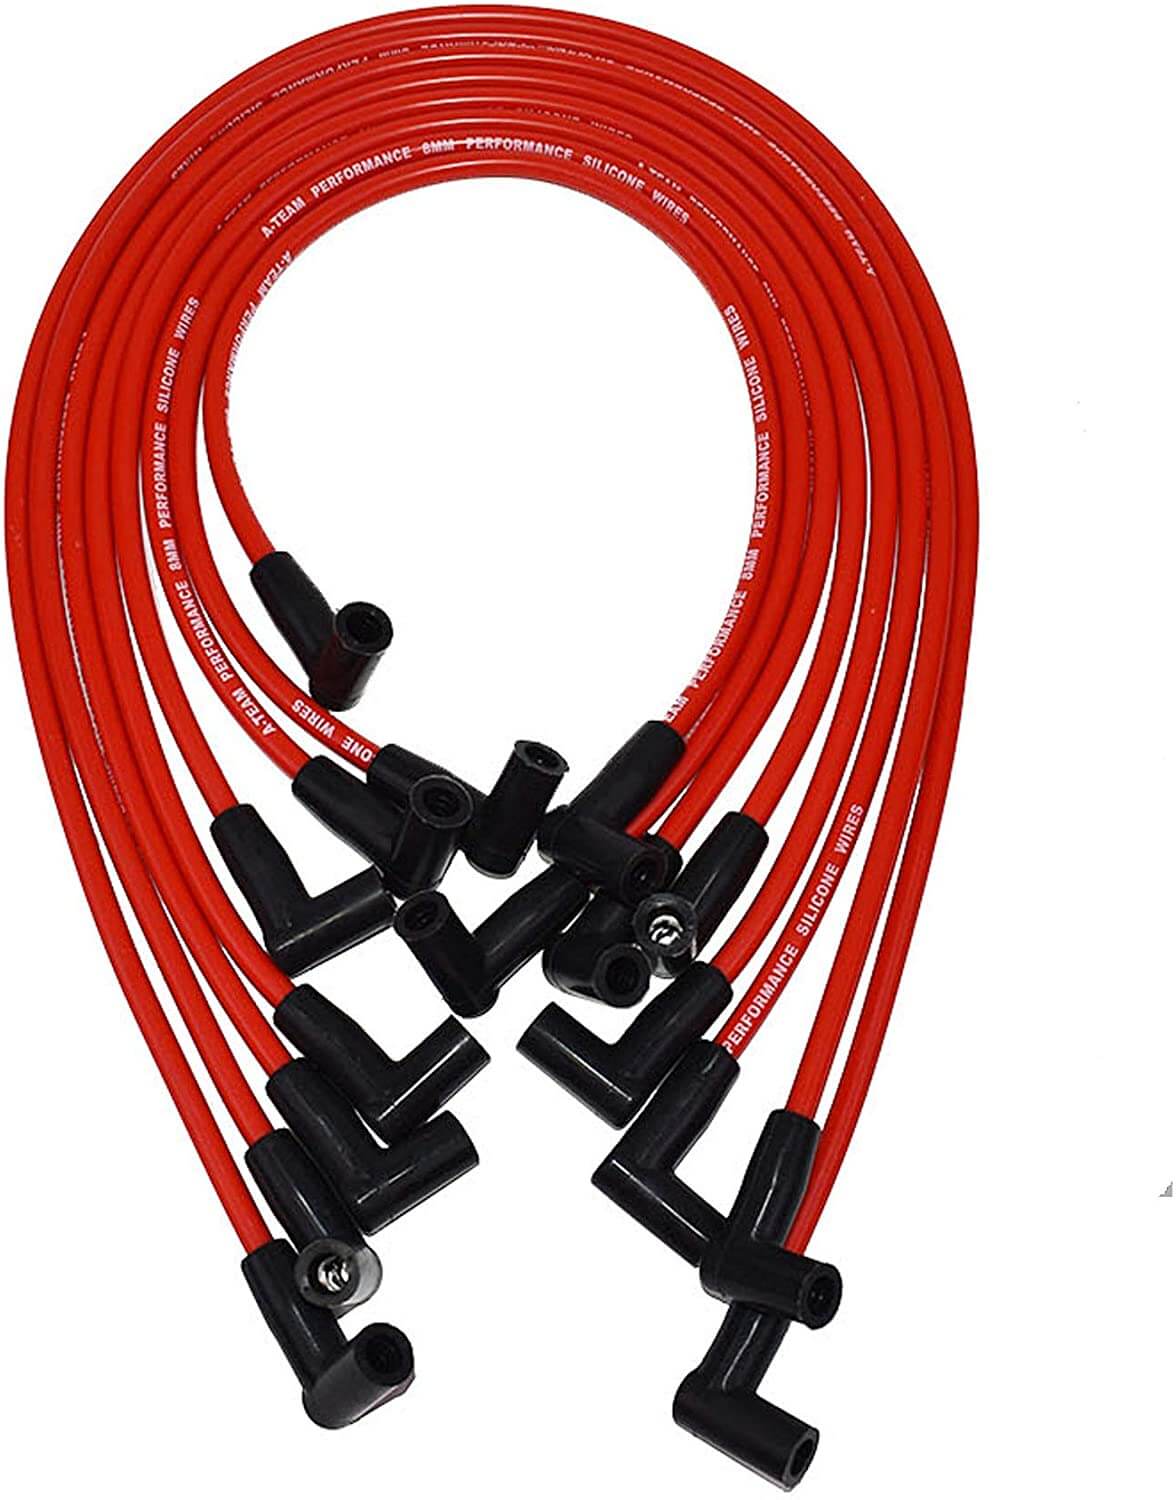 best spark plug wires for 5.3 vortec